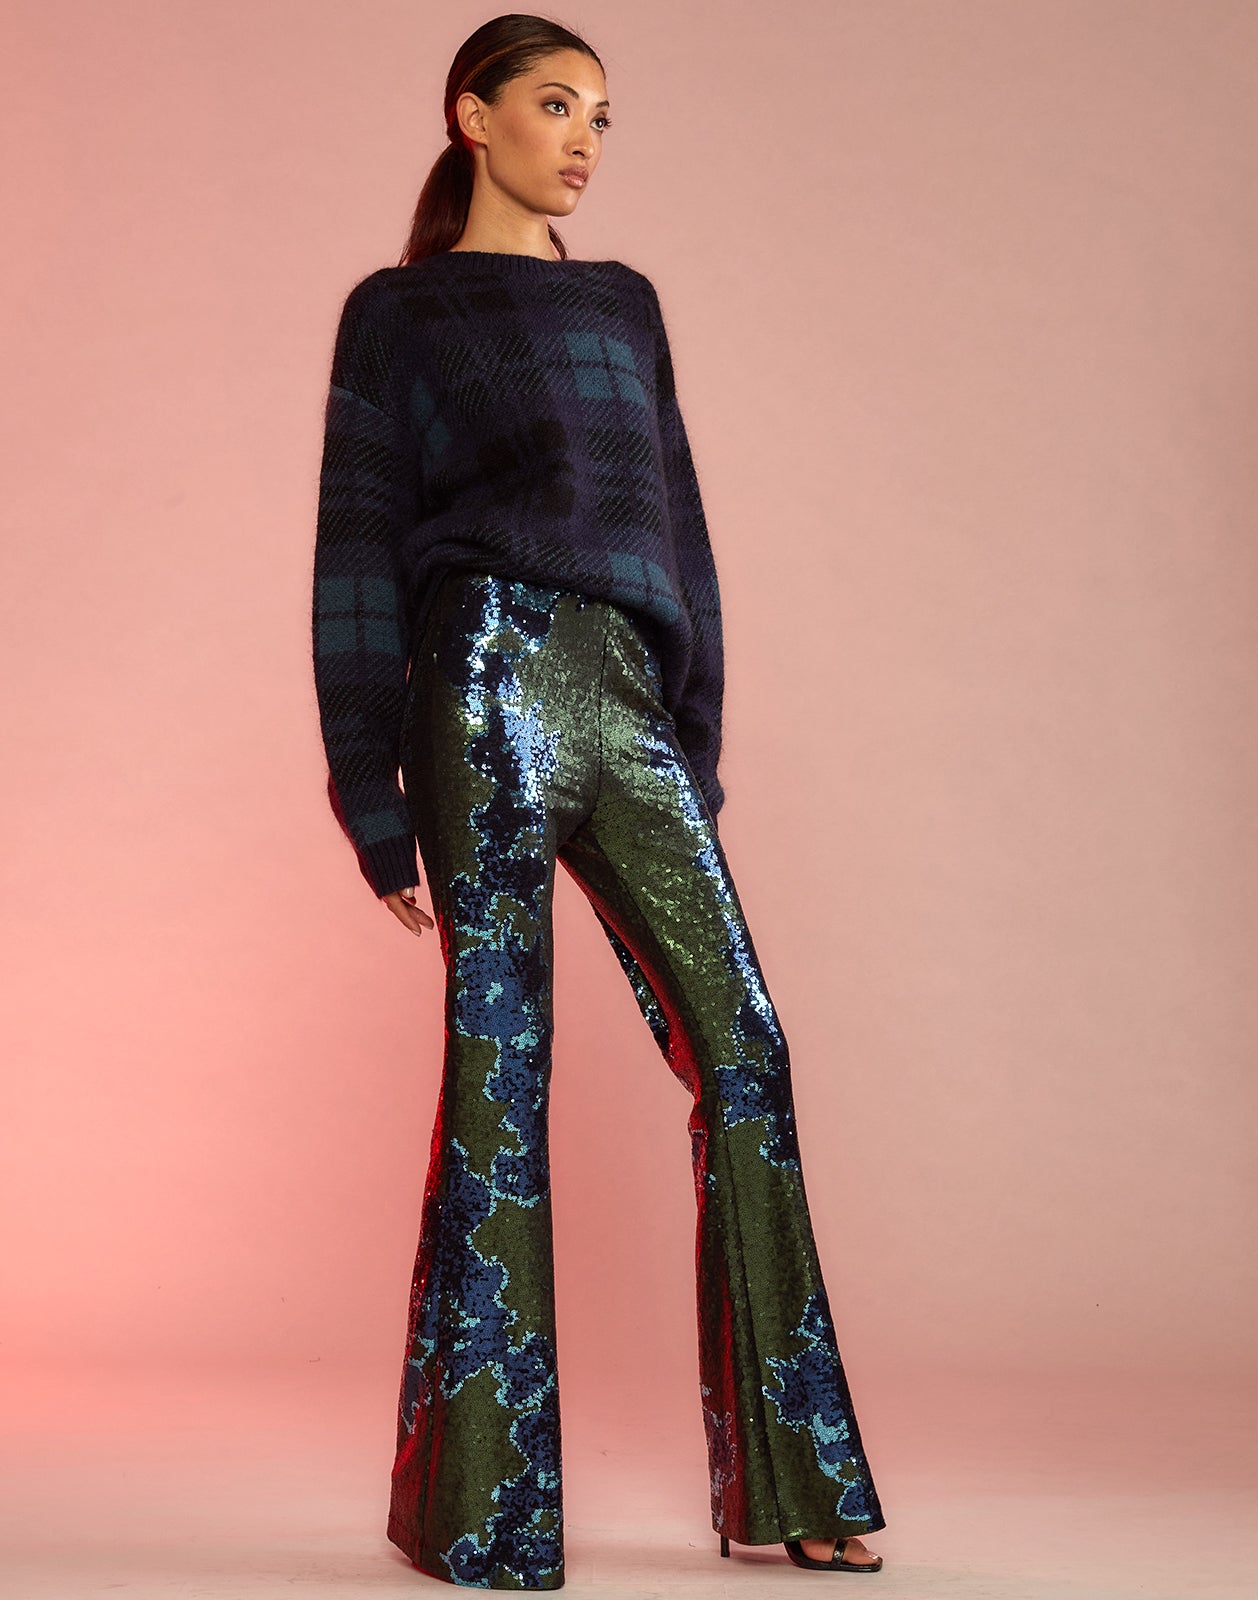 Zara Gold sequin Trousers S/M/L/XL | eBay